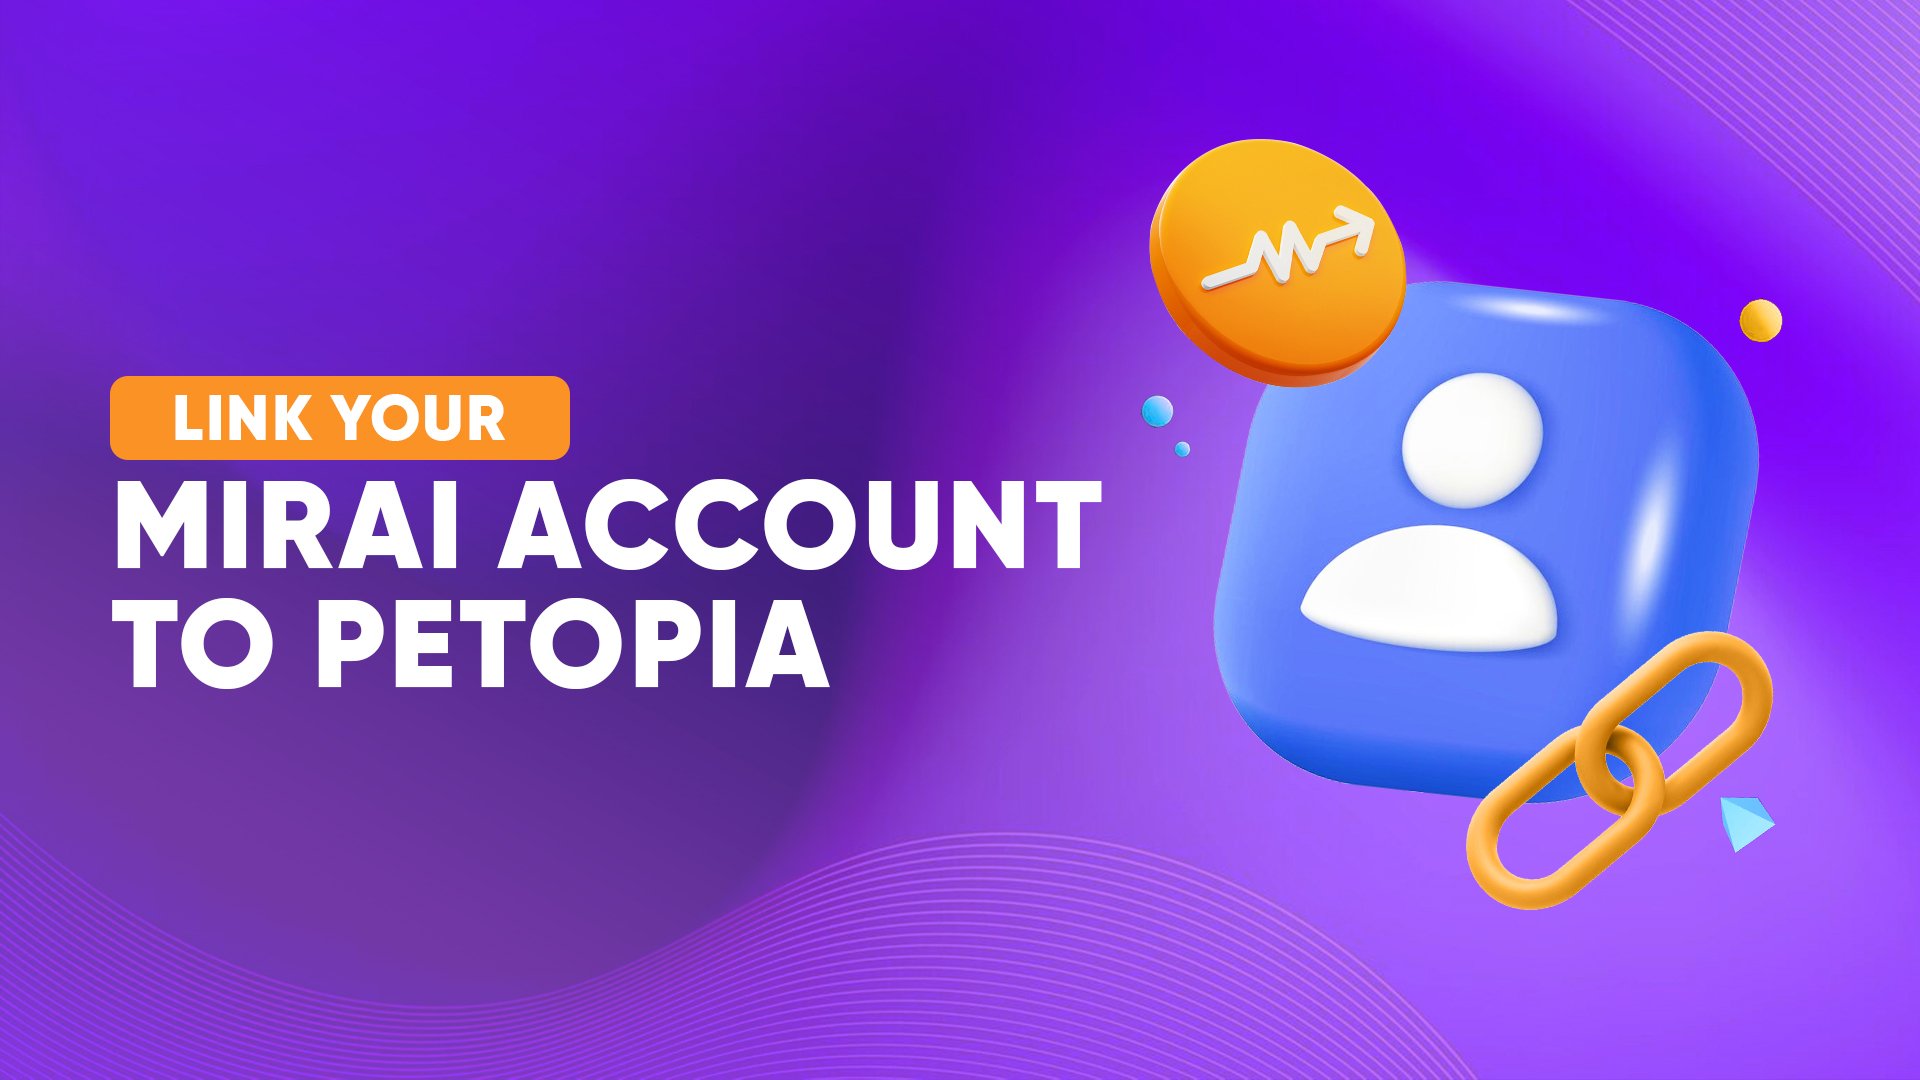 Link Your Mirai Account to Petopia